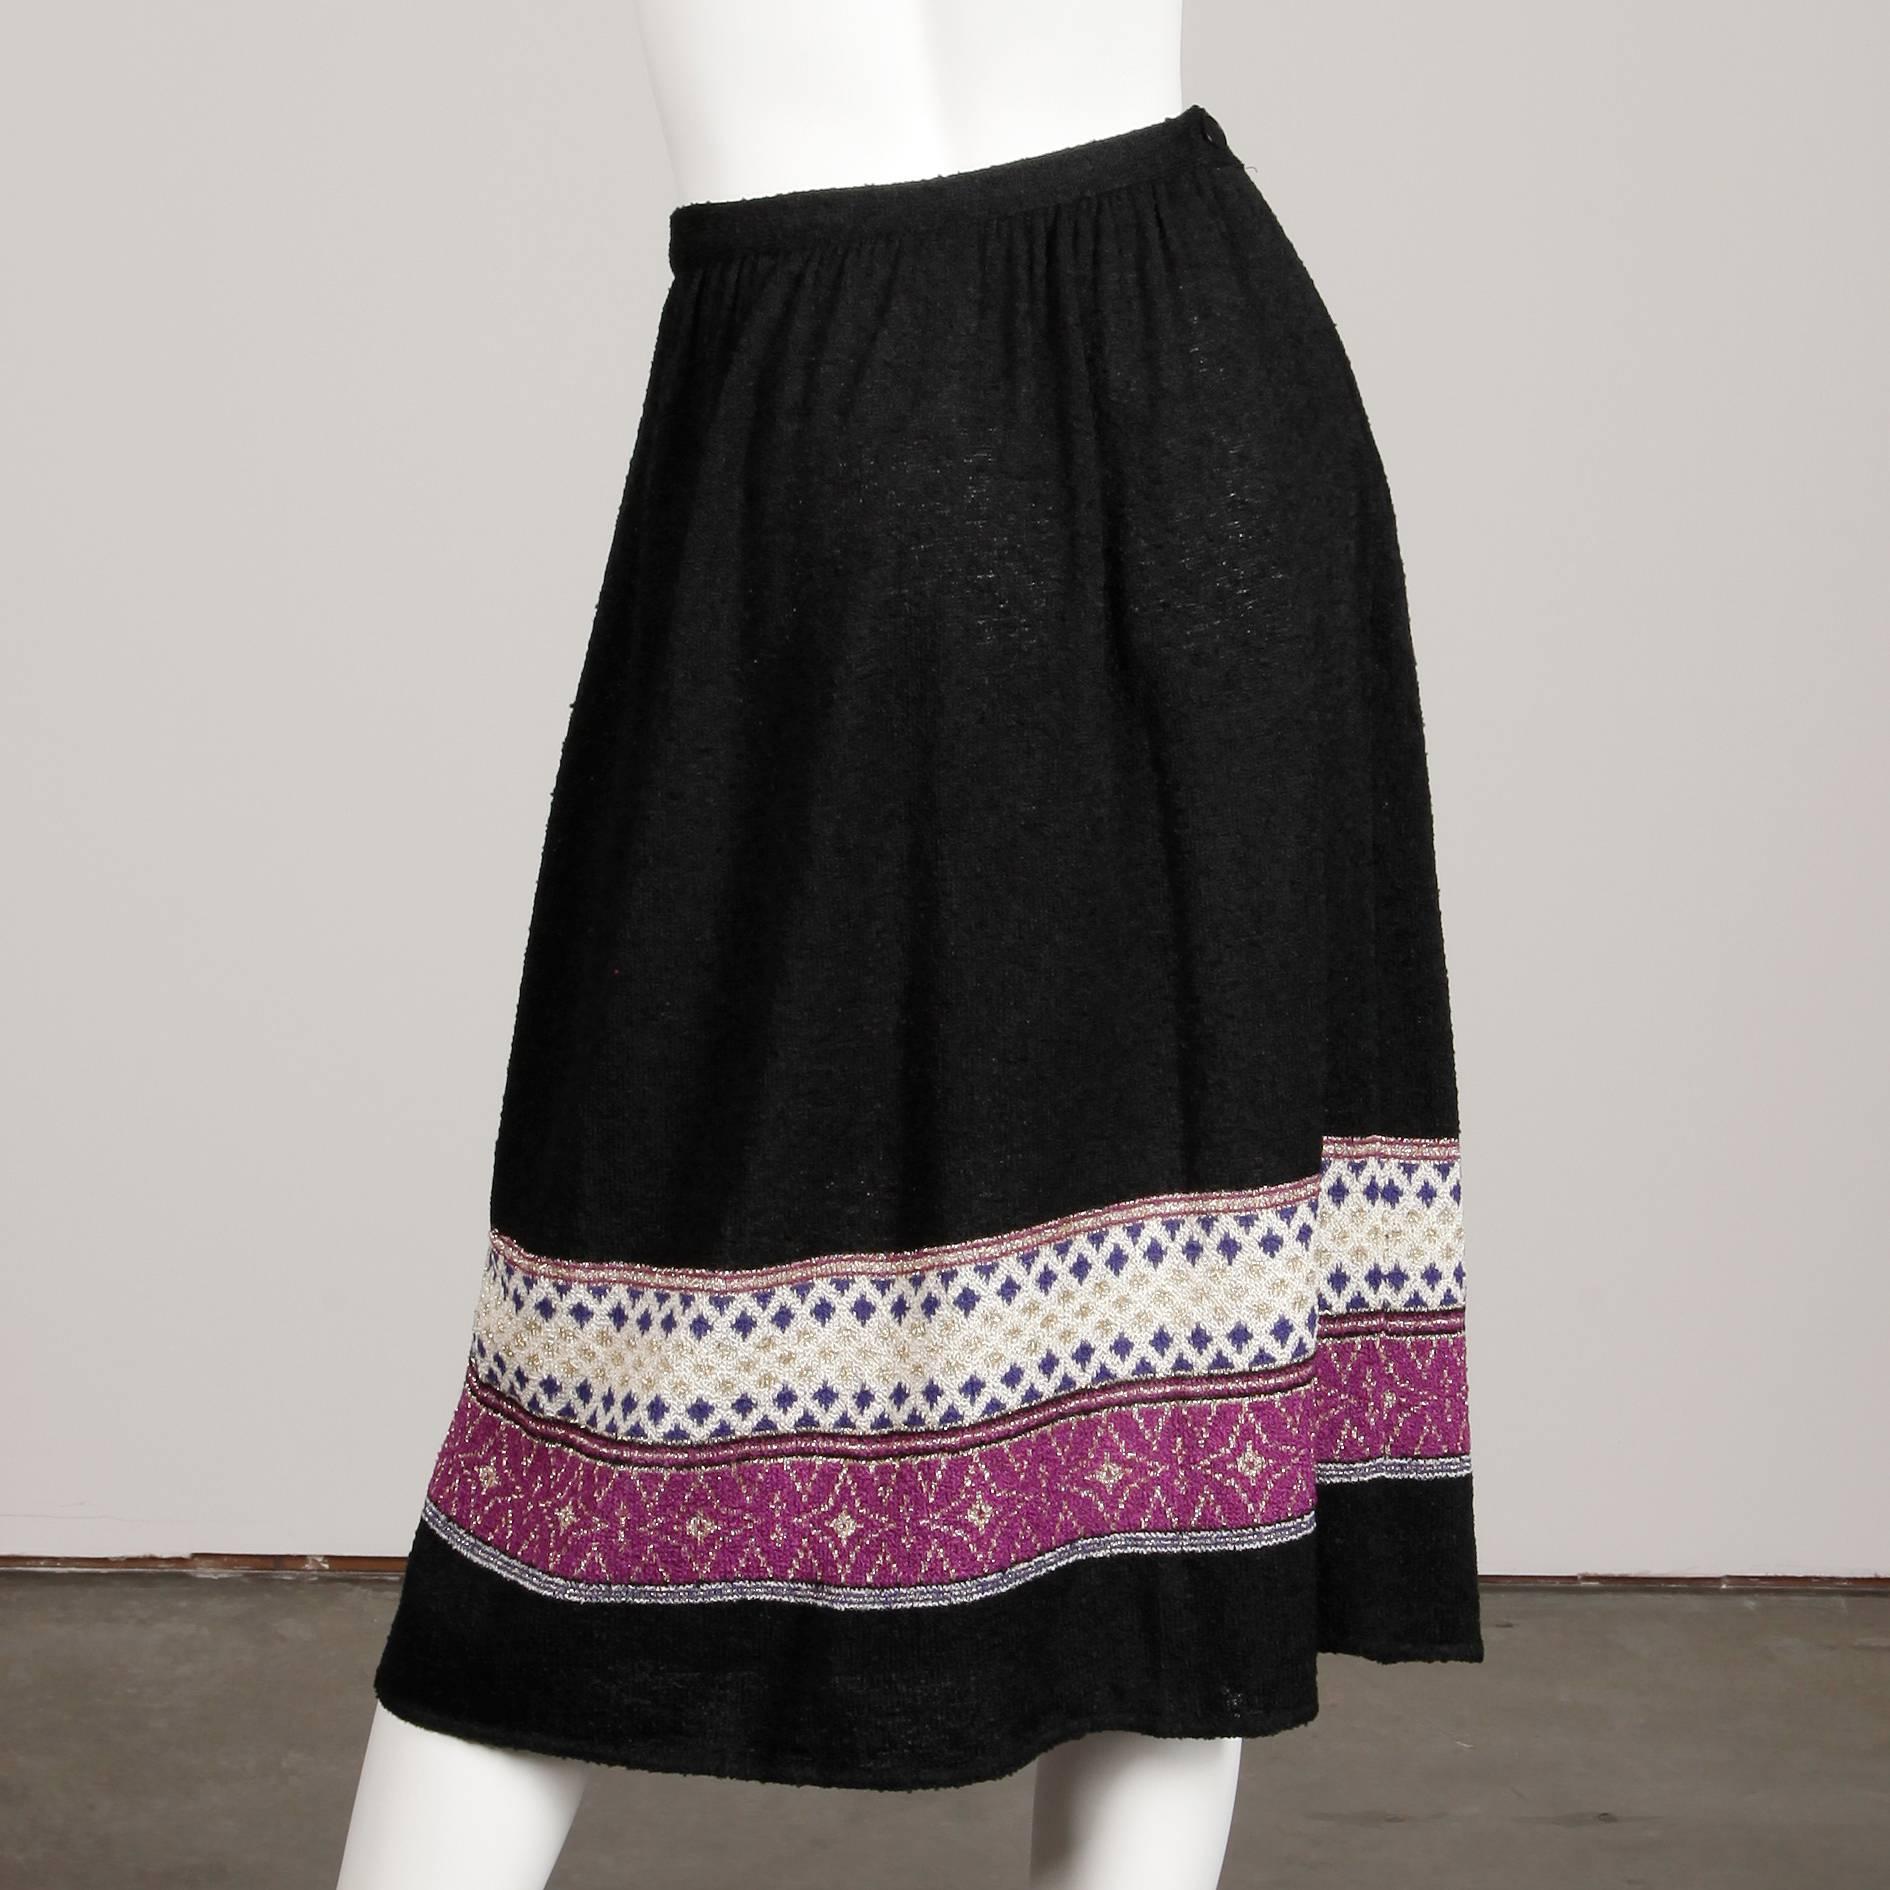 1970s Oscar de la Renta Vintage Knit Sweater Top, Skirt + Belt Dress Ensemble  For Sale 1